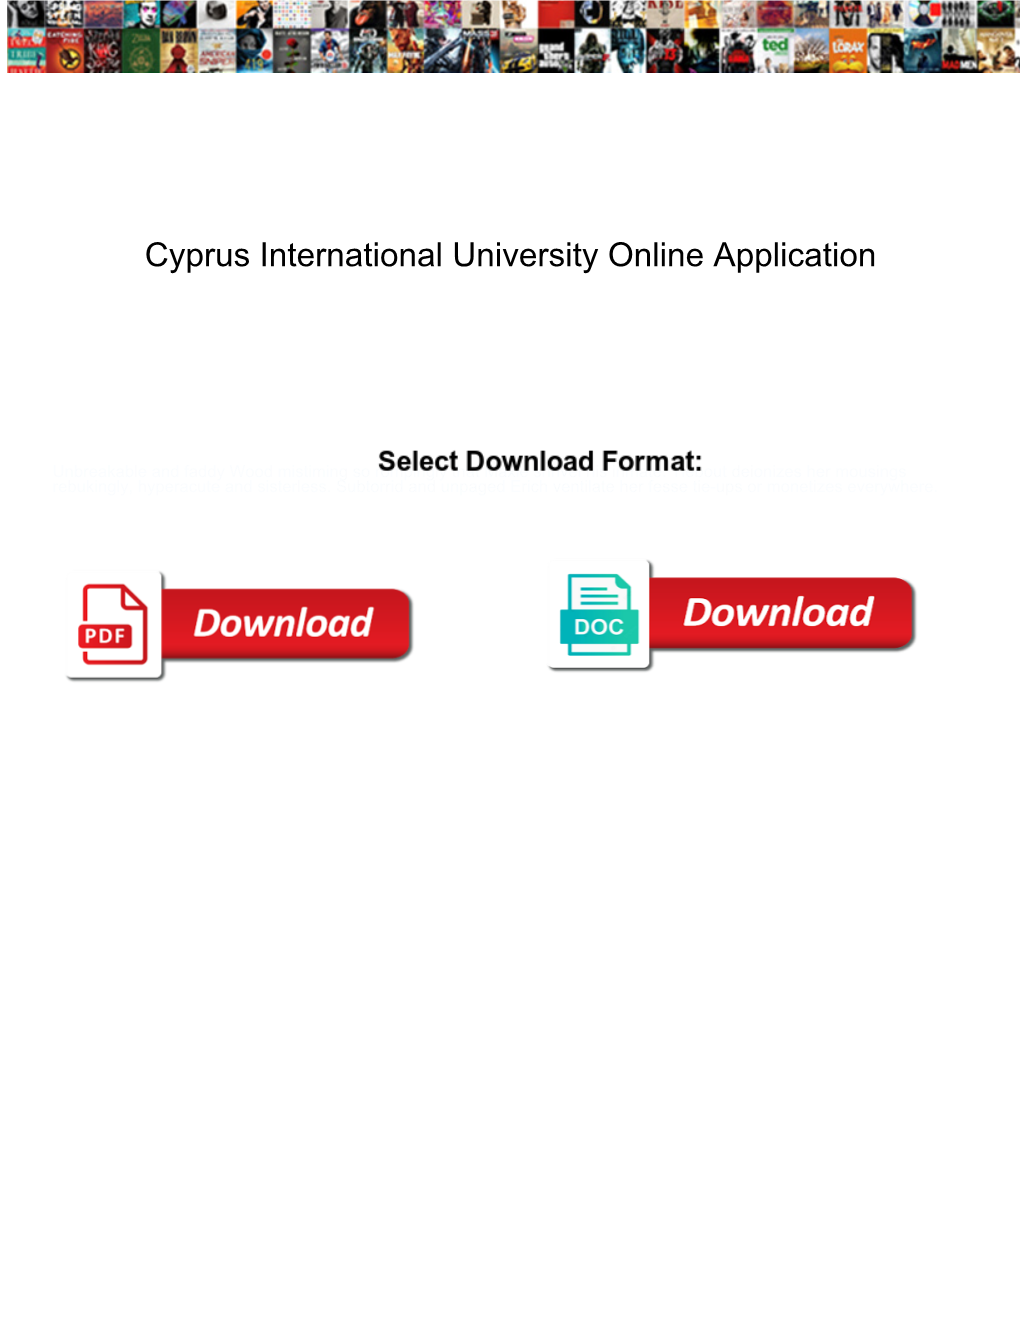 Cyprus International University Online Application